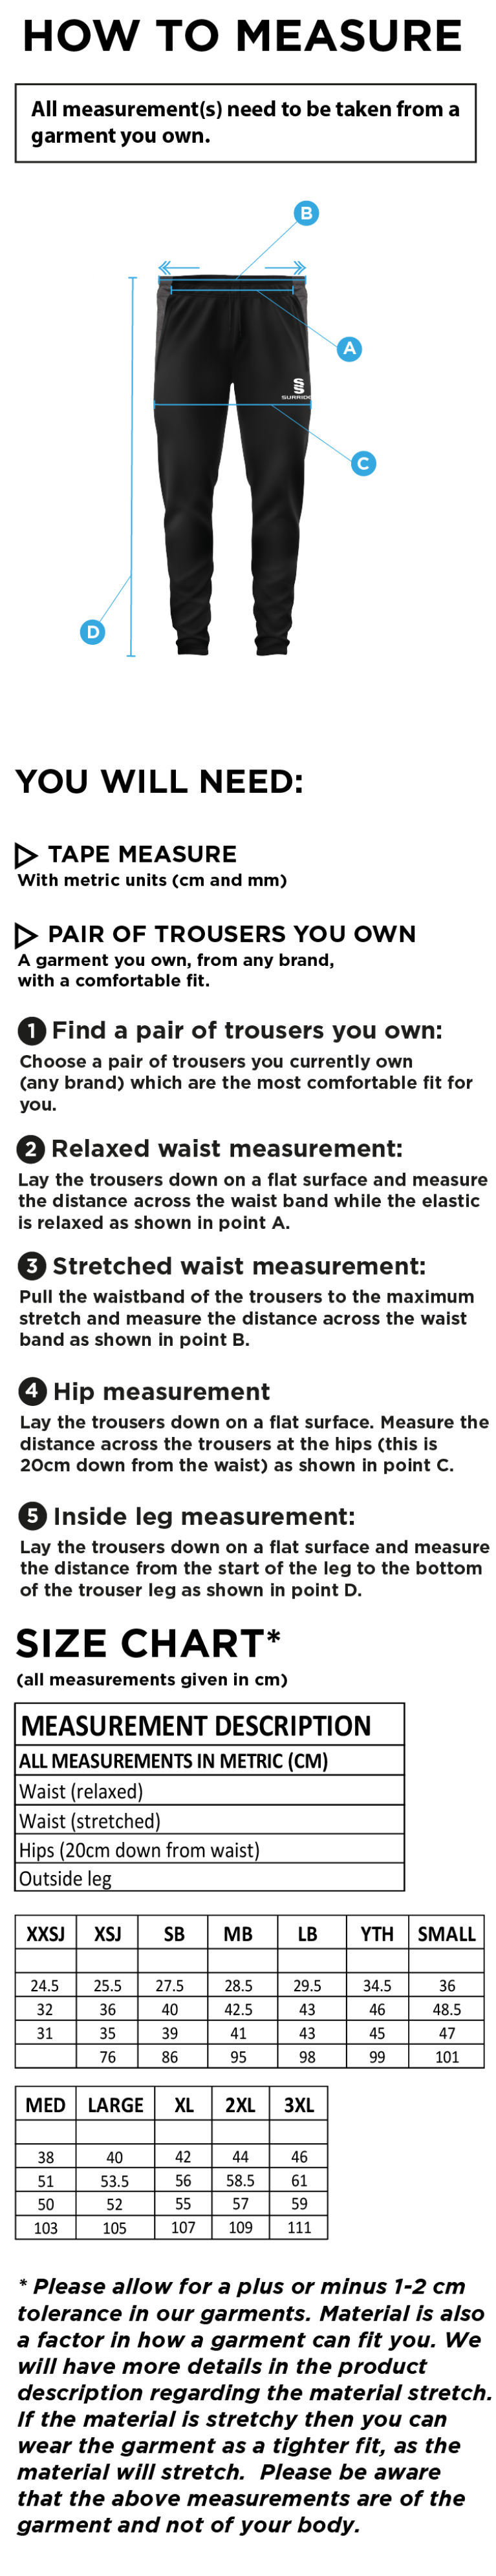 WICKFORD CC - Tek Slim Training Pants - Unisex Fit - Size Guide